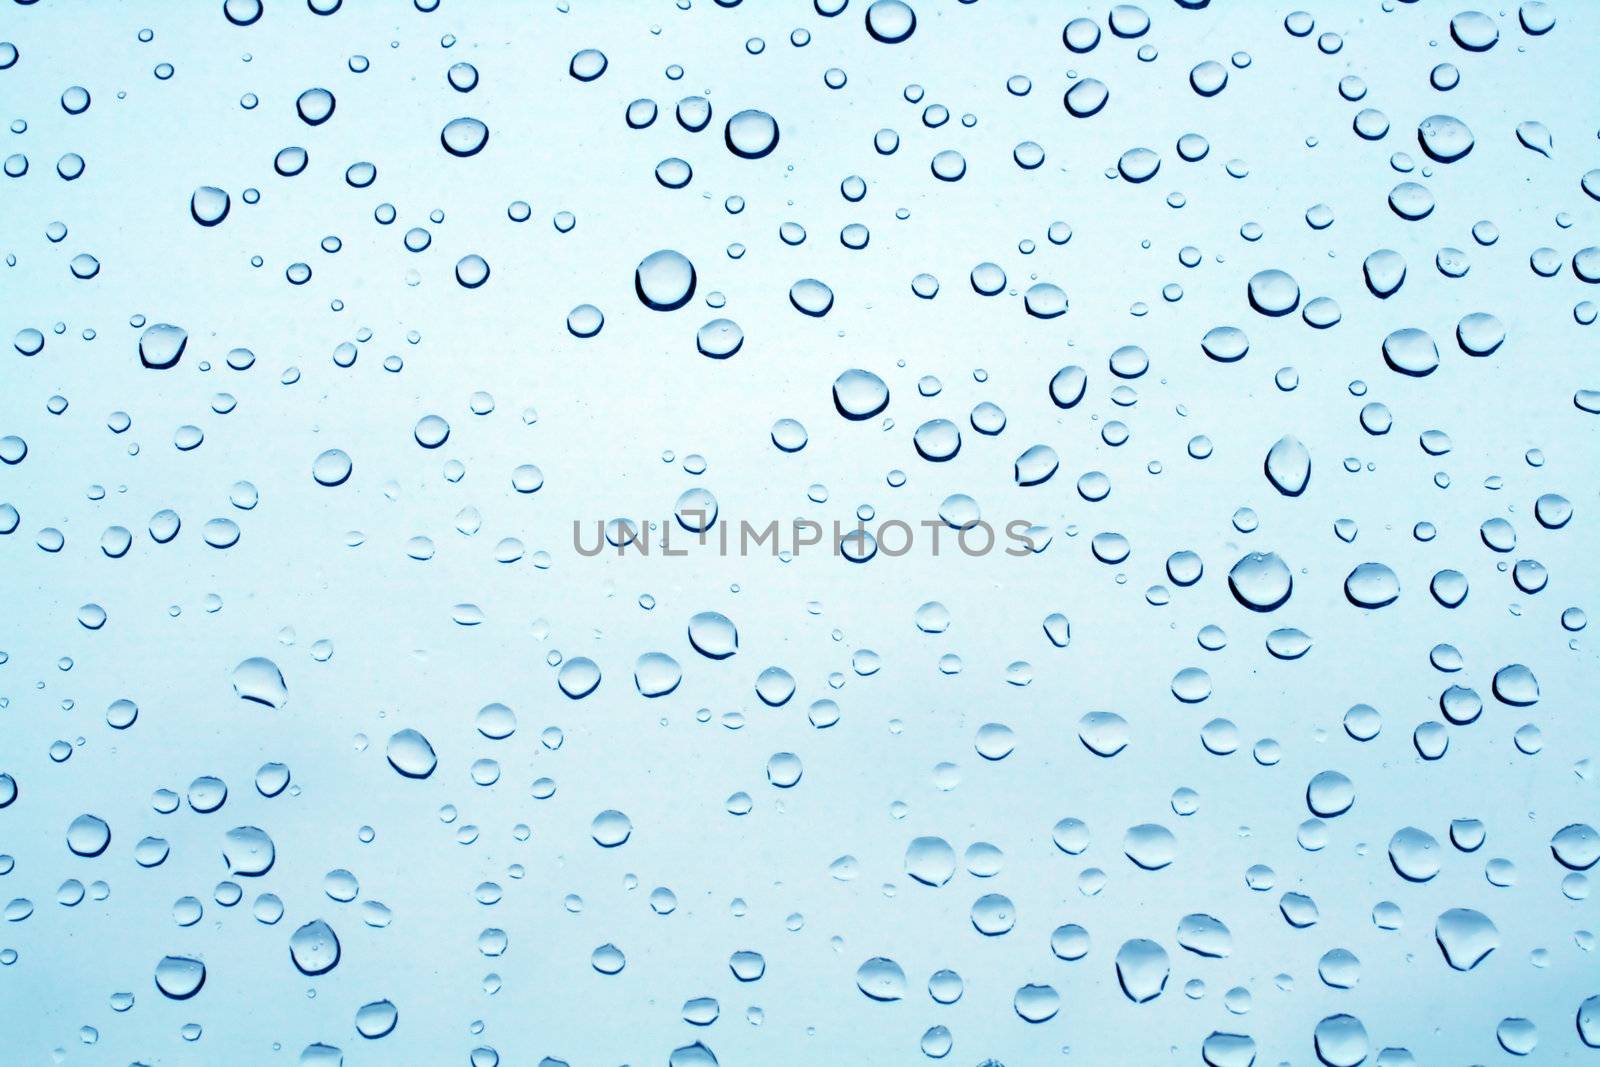 rain drops on glass by Mikko